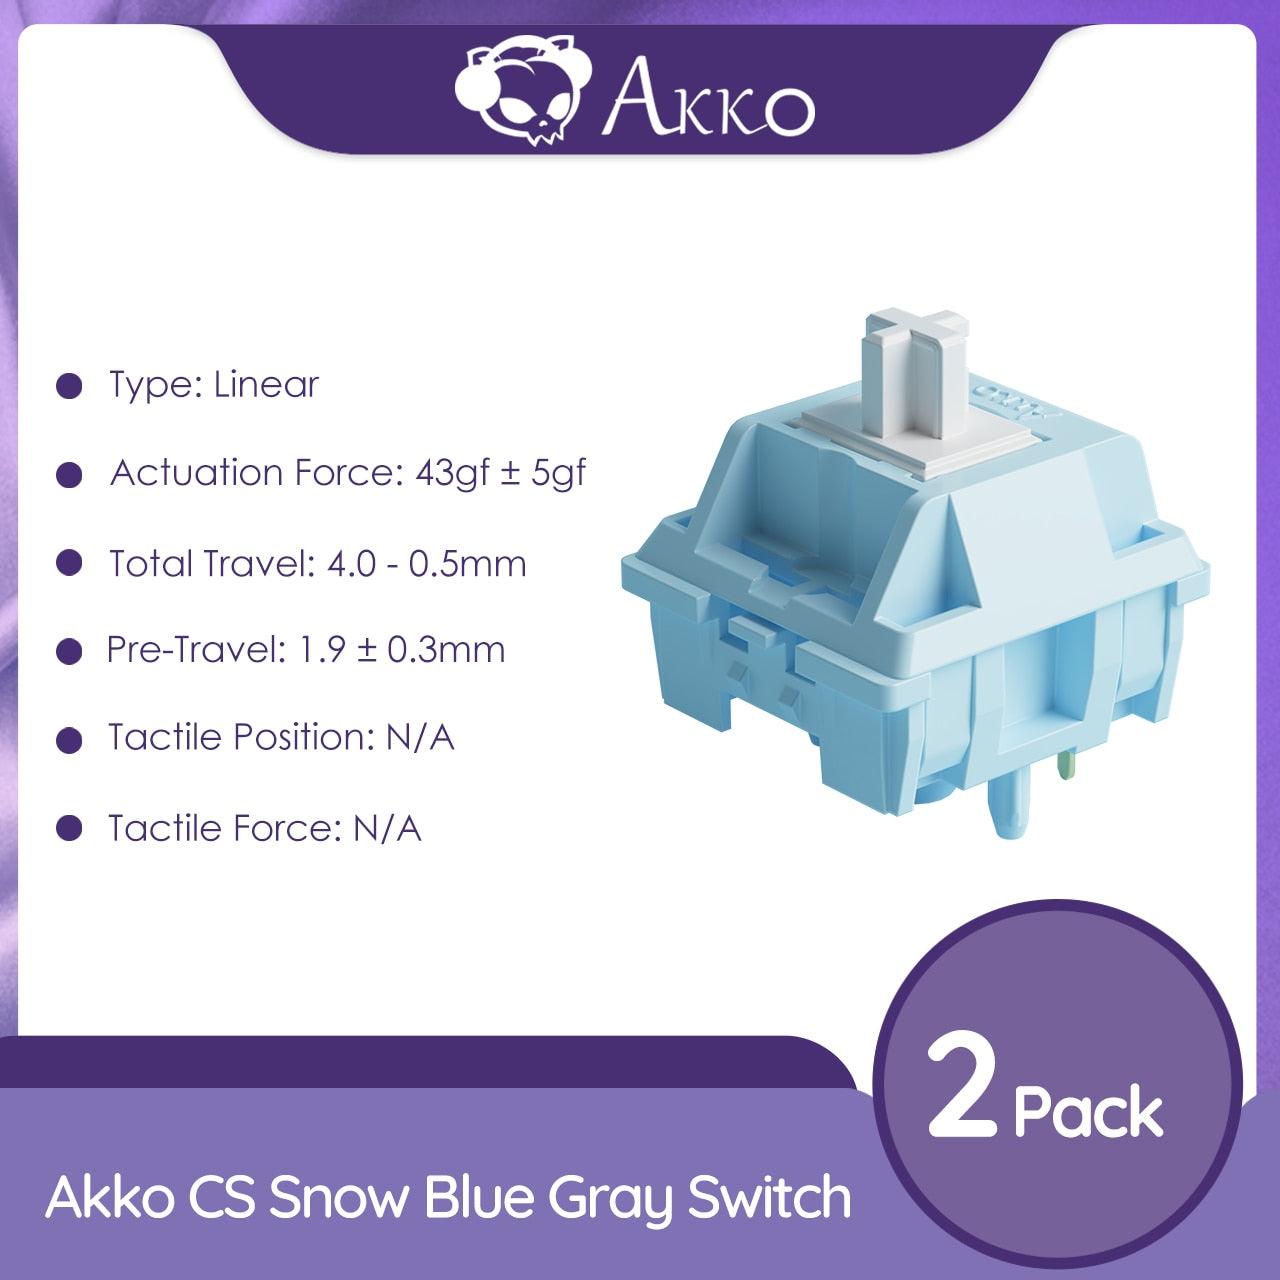 Akko CS Snow Blue Grey Switch 5 Pin 43gf Linear Switch Compatible with MX Mechanical Keyboard (45 pcs)